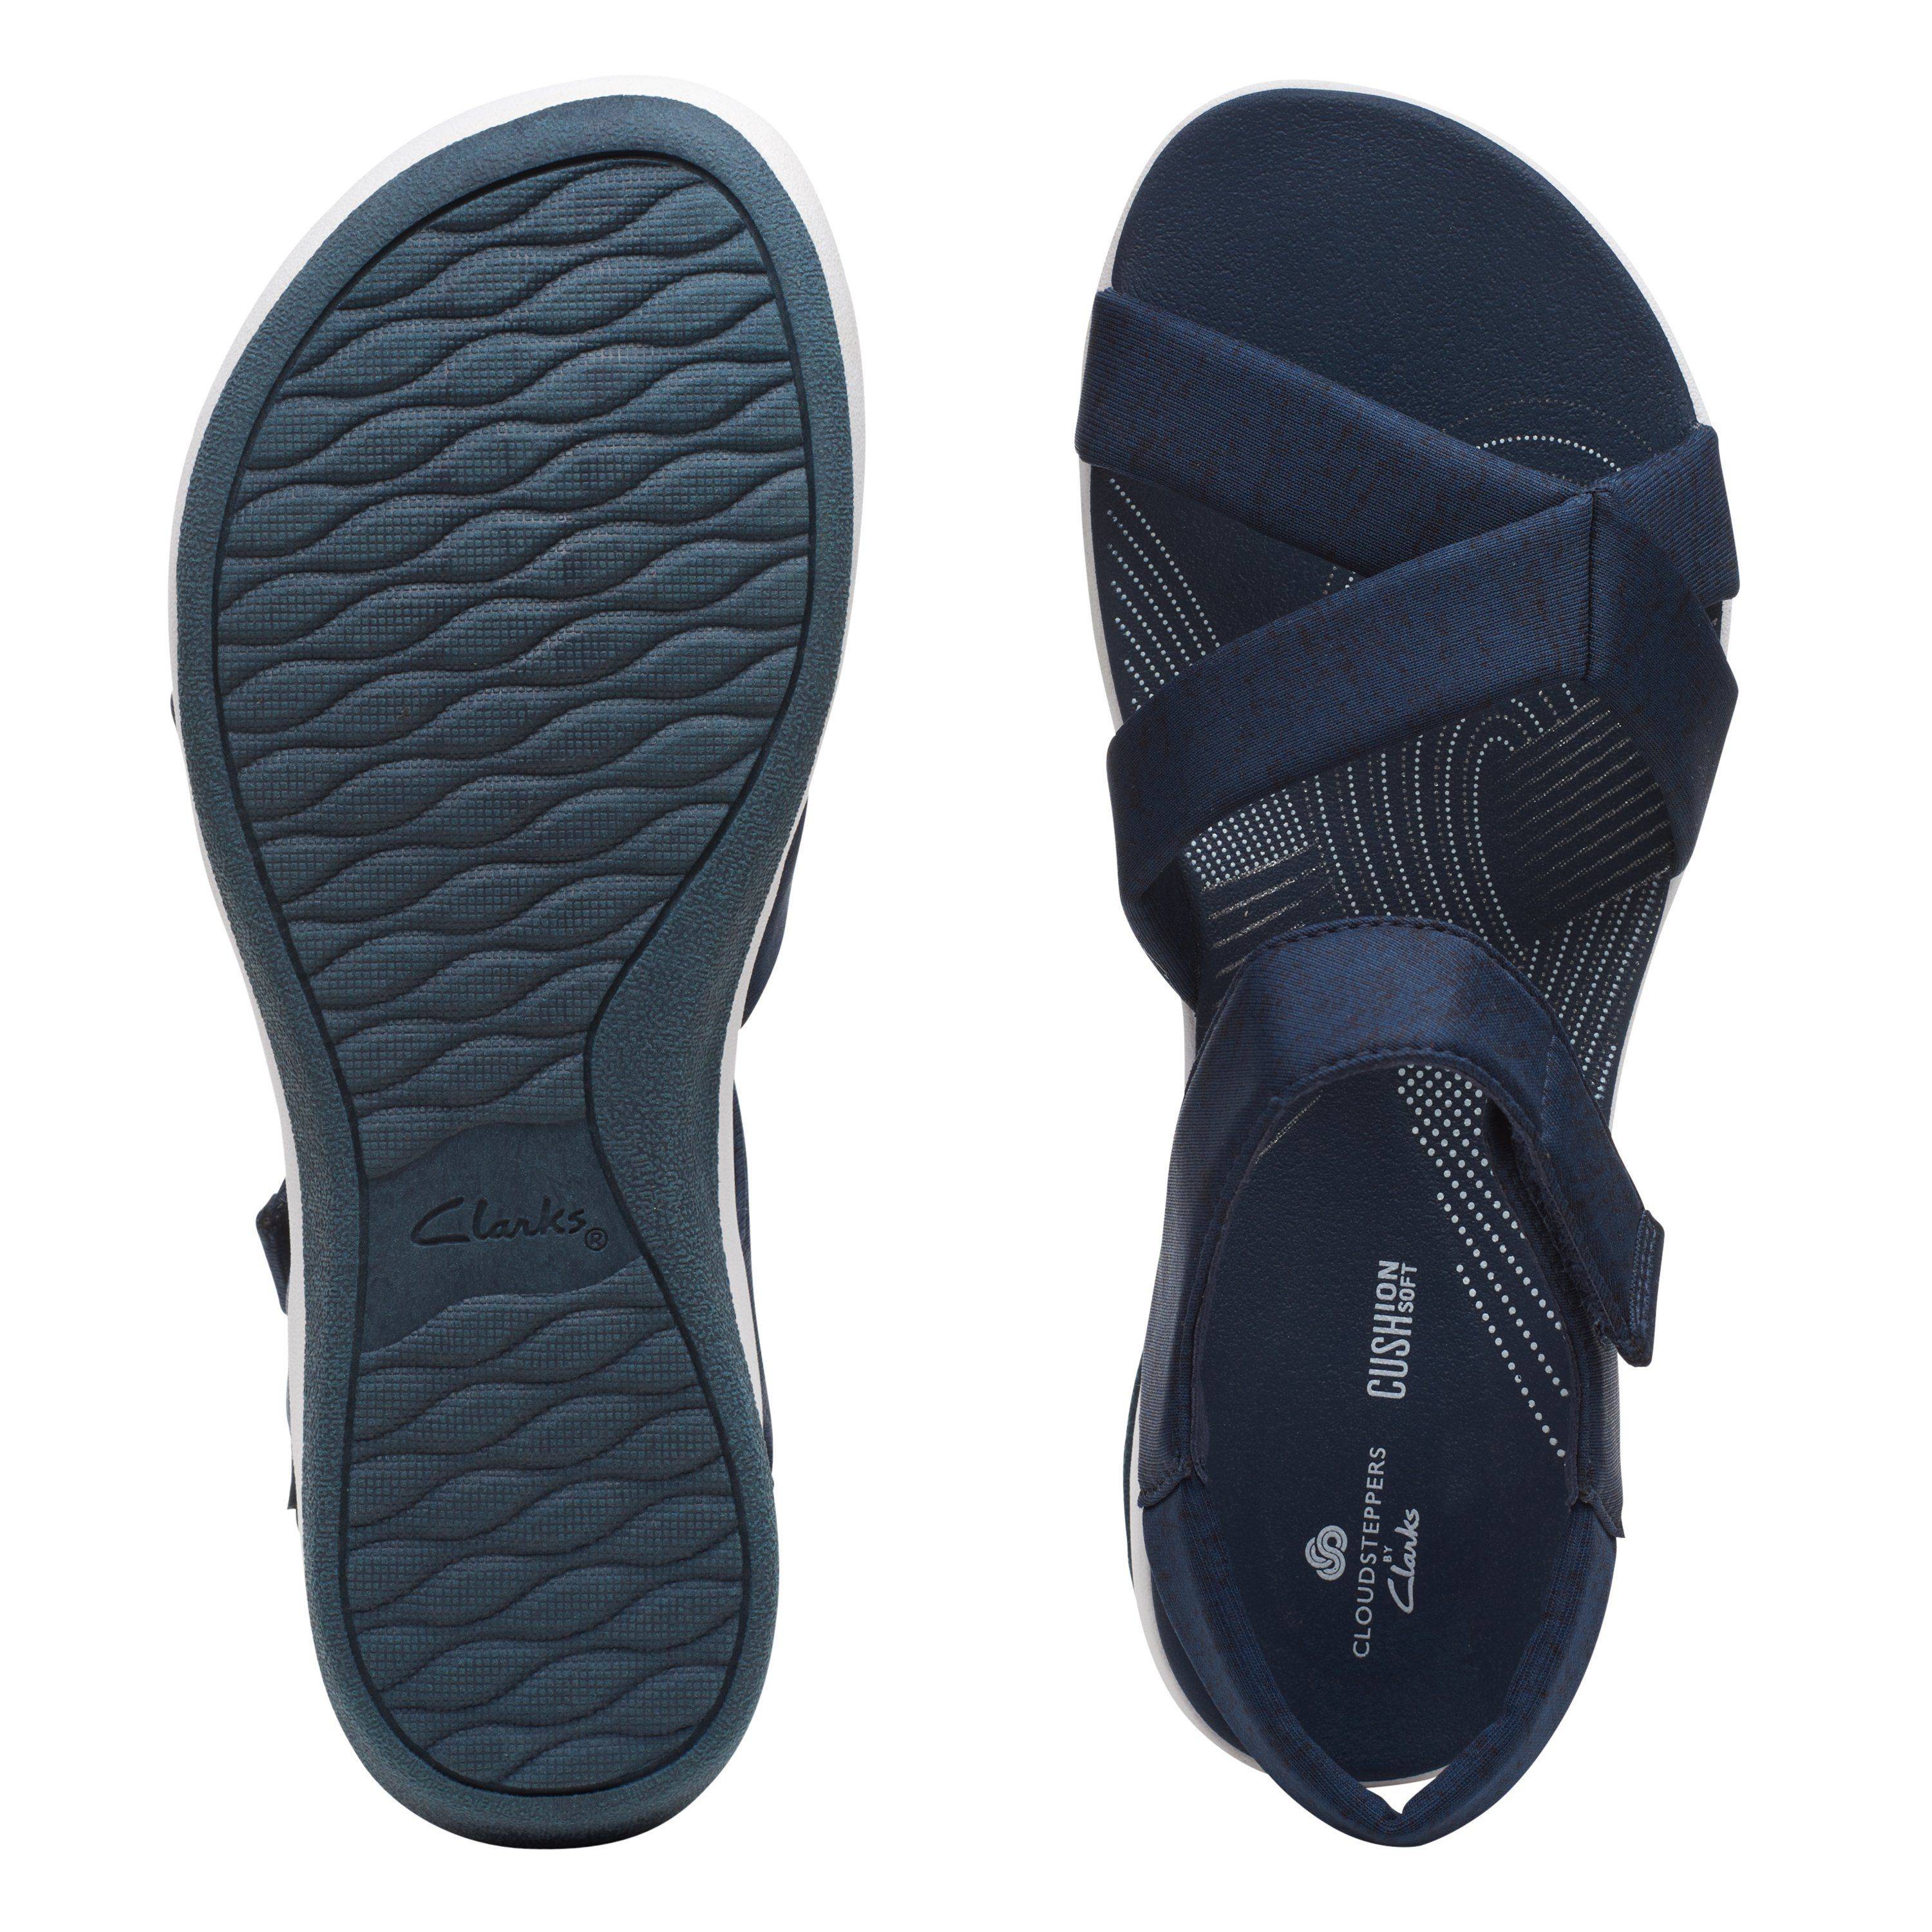 Женские сандалии Clarks, синие, цвет синий, размер 38 - фото 7